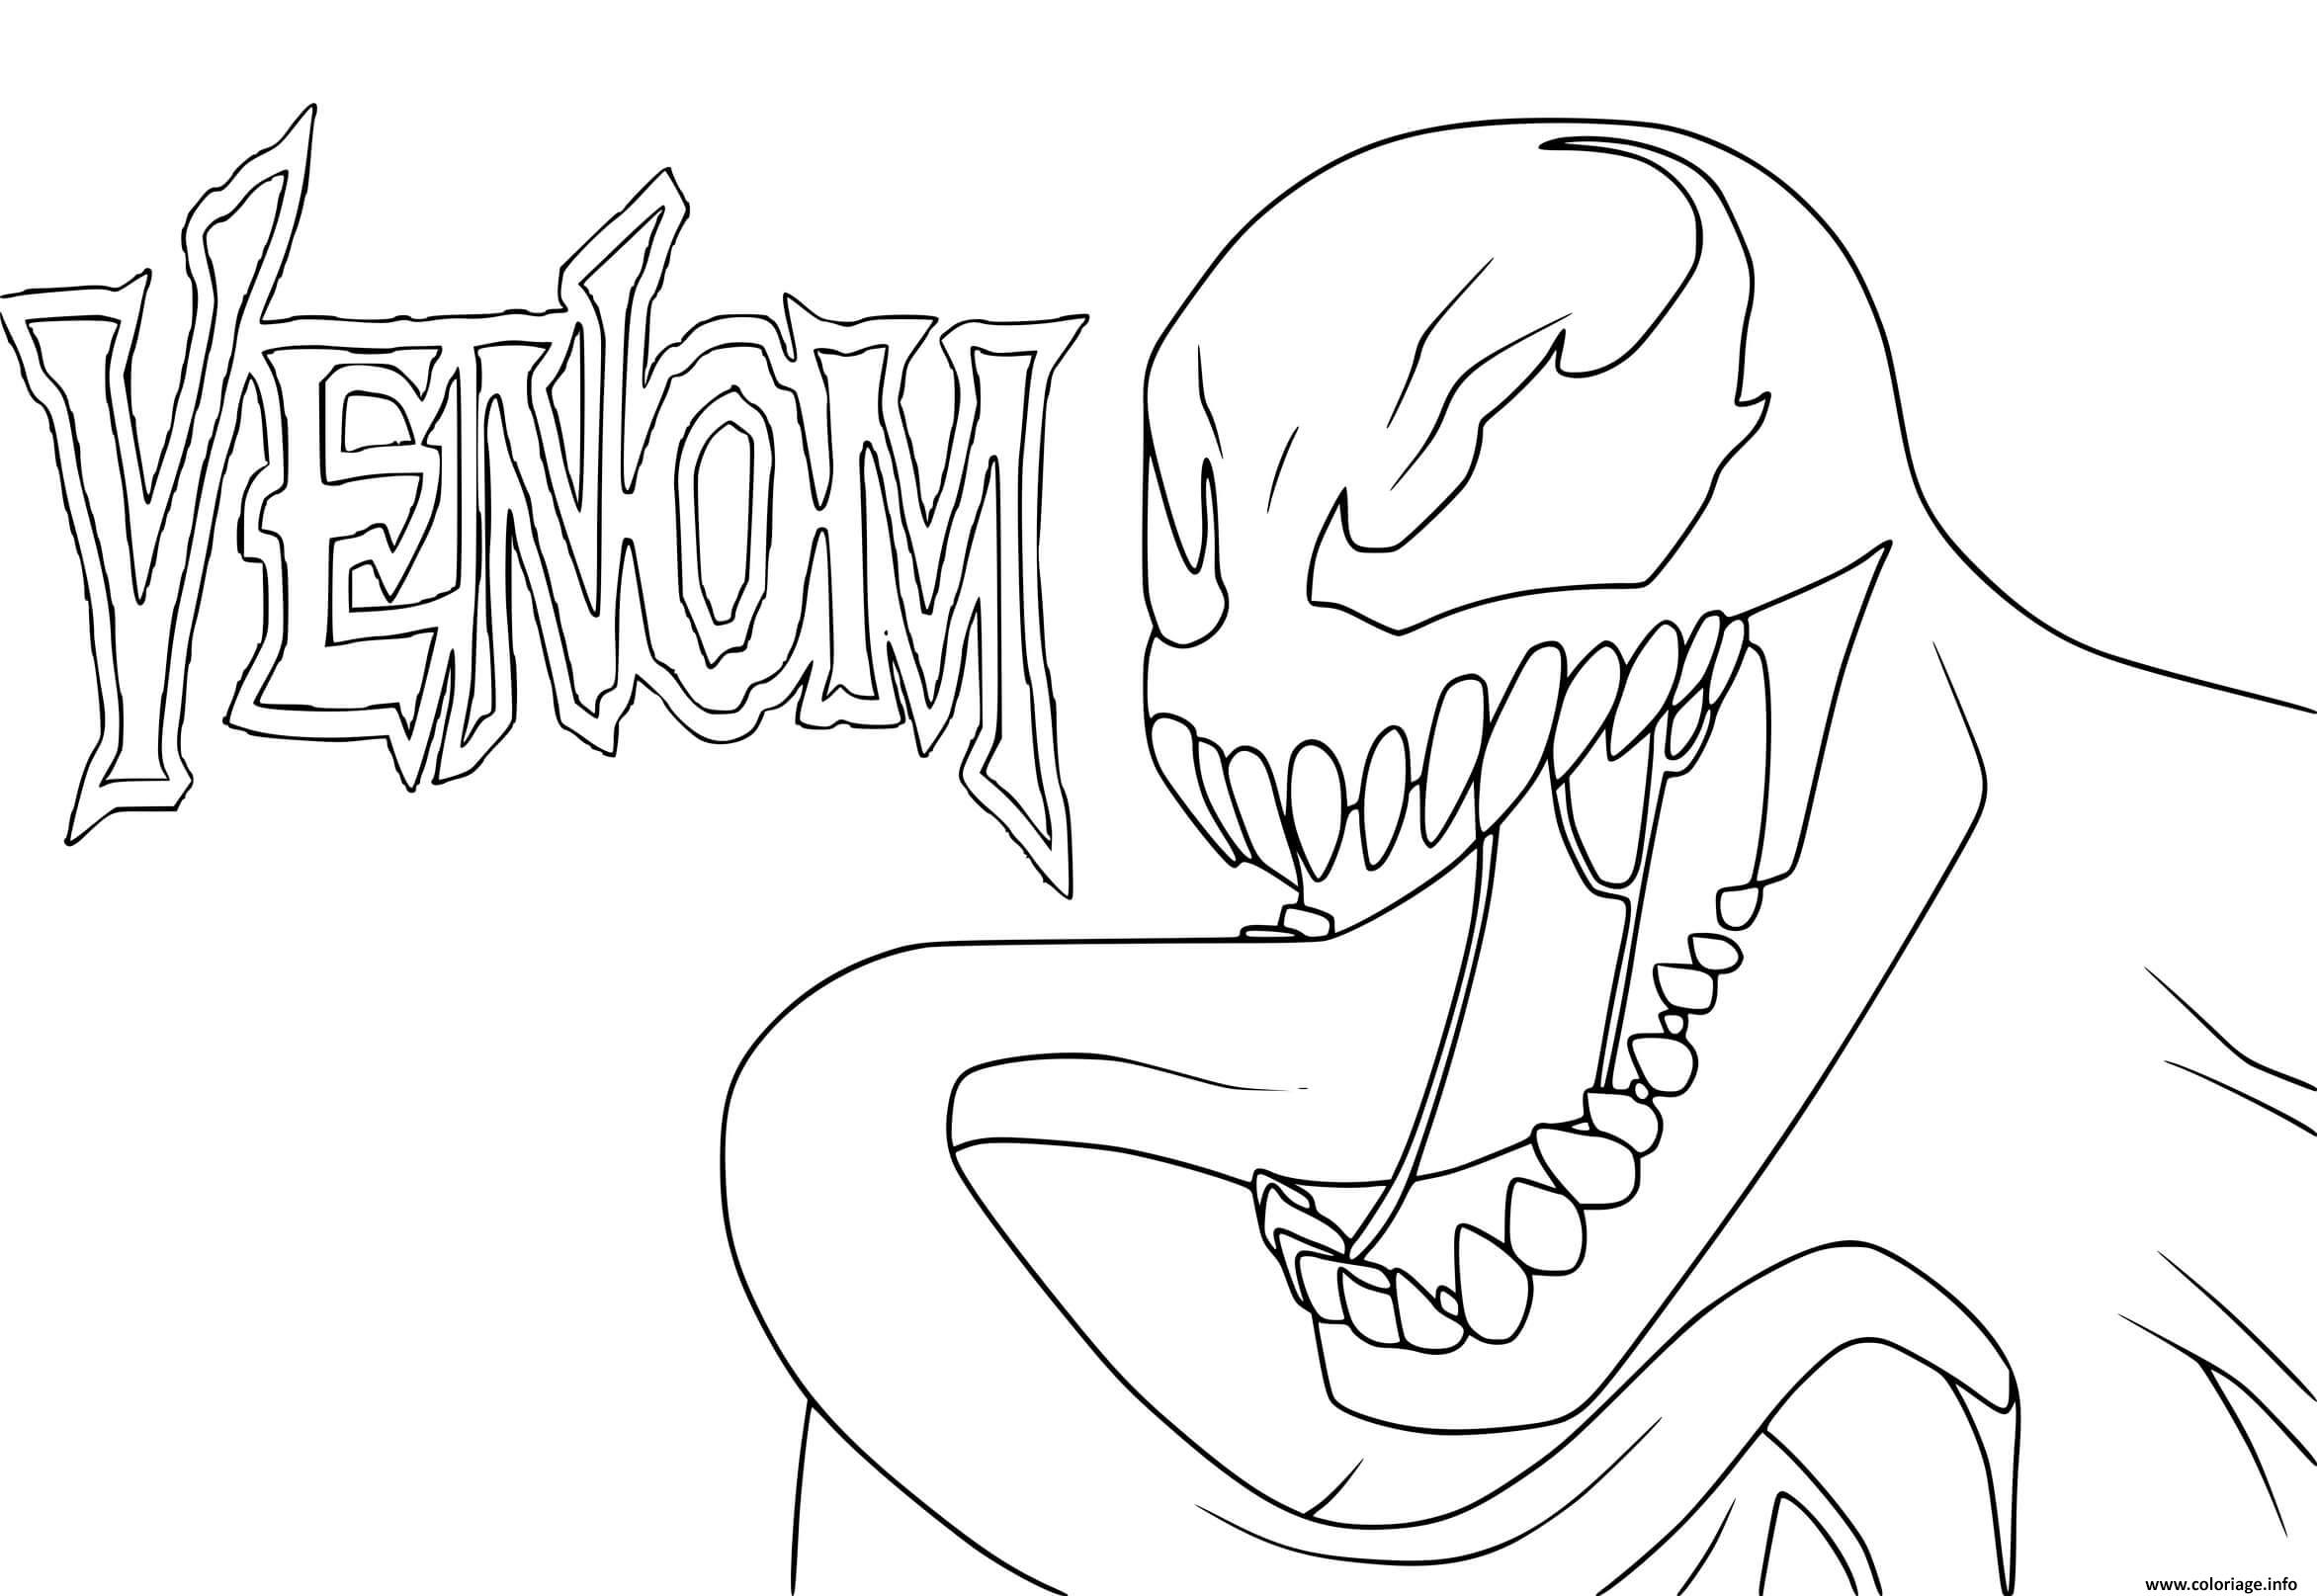 Coloriage Venom Eddie Brock Marvel - JeColorie.com